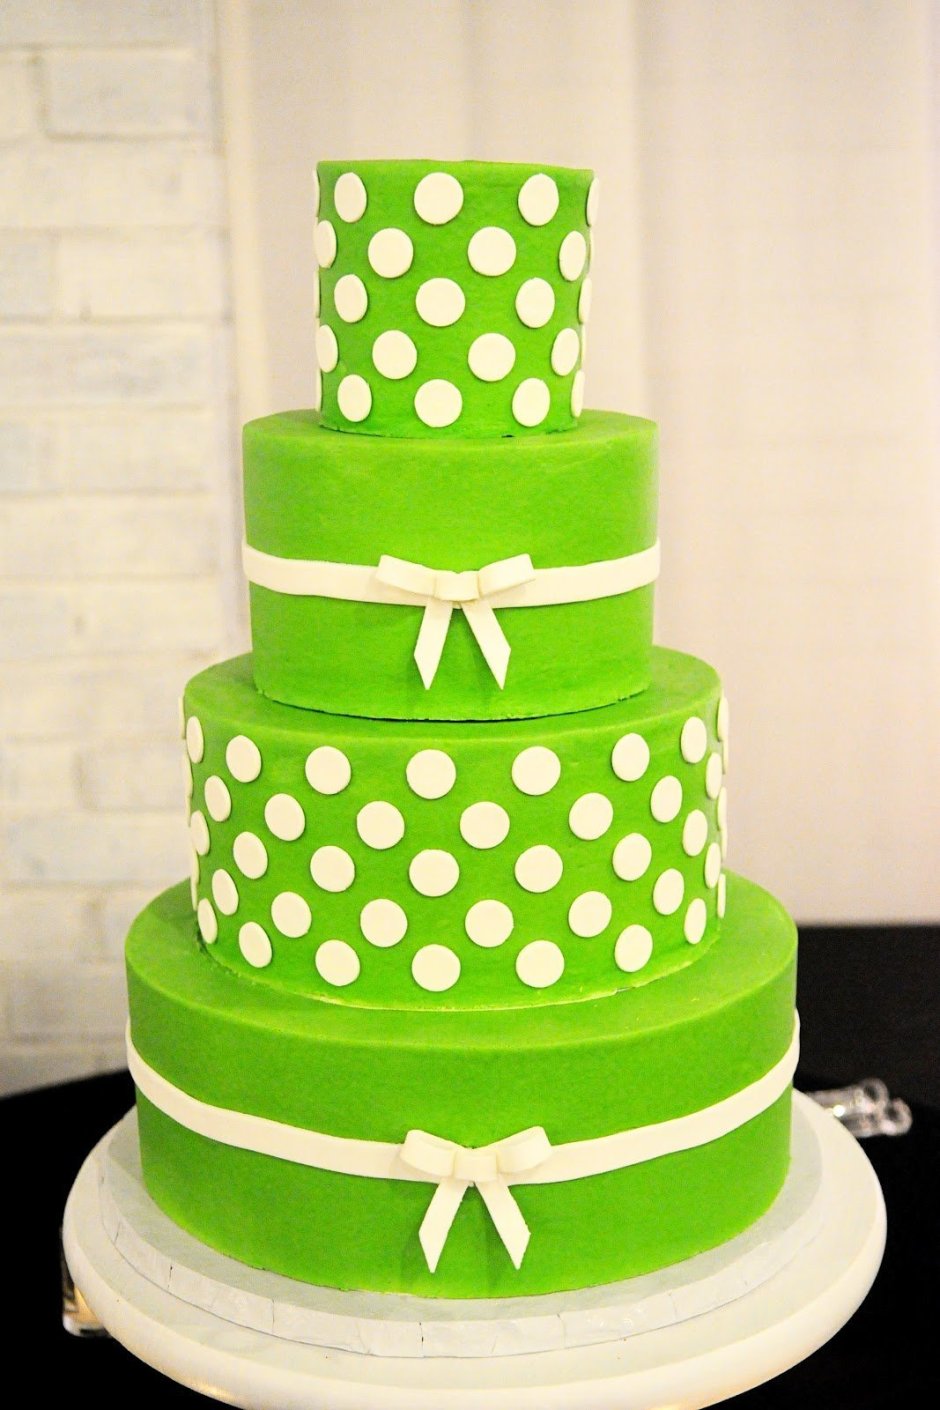 Торт зеленого цвета